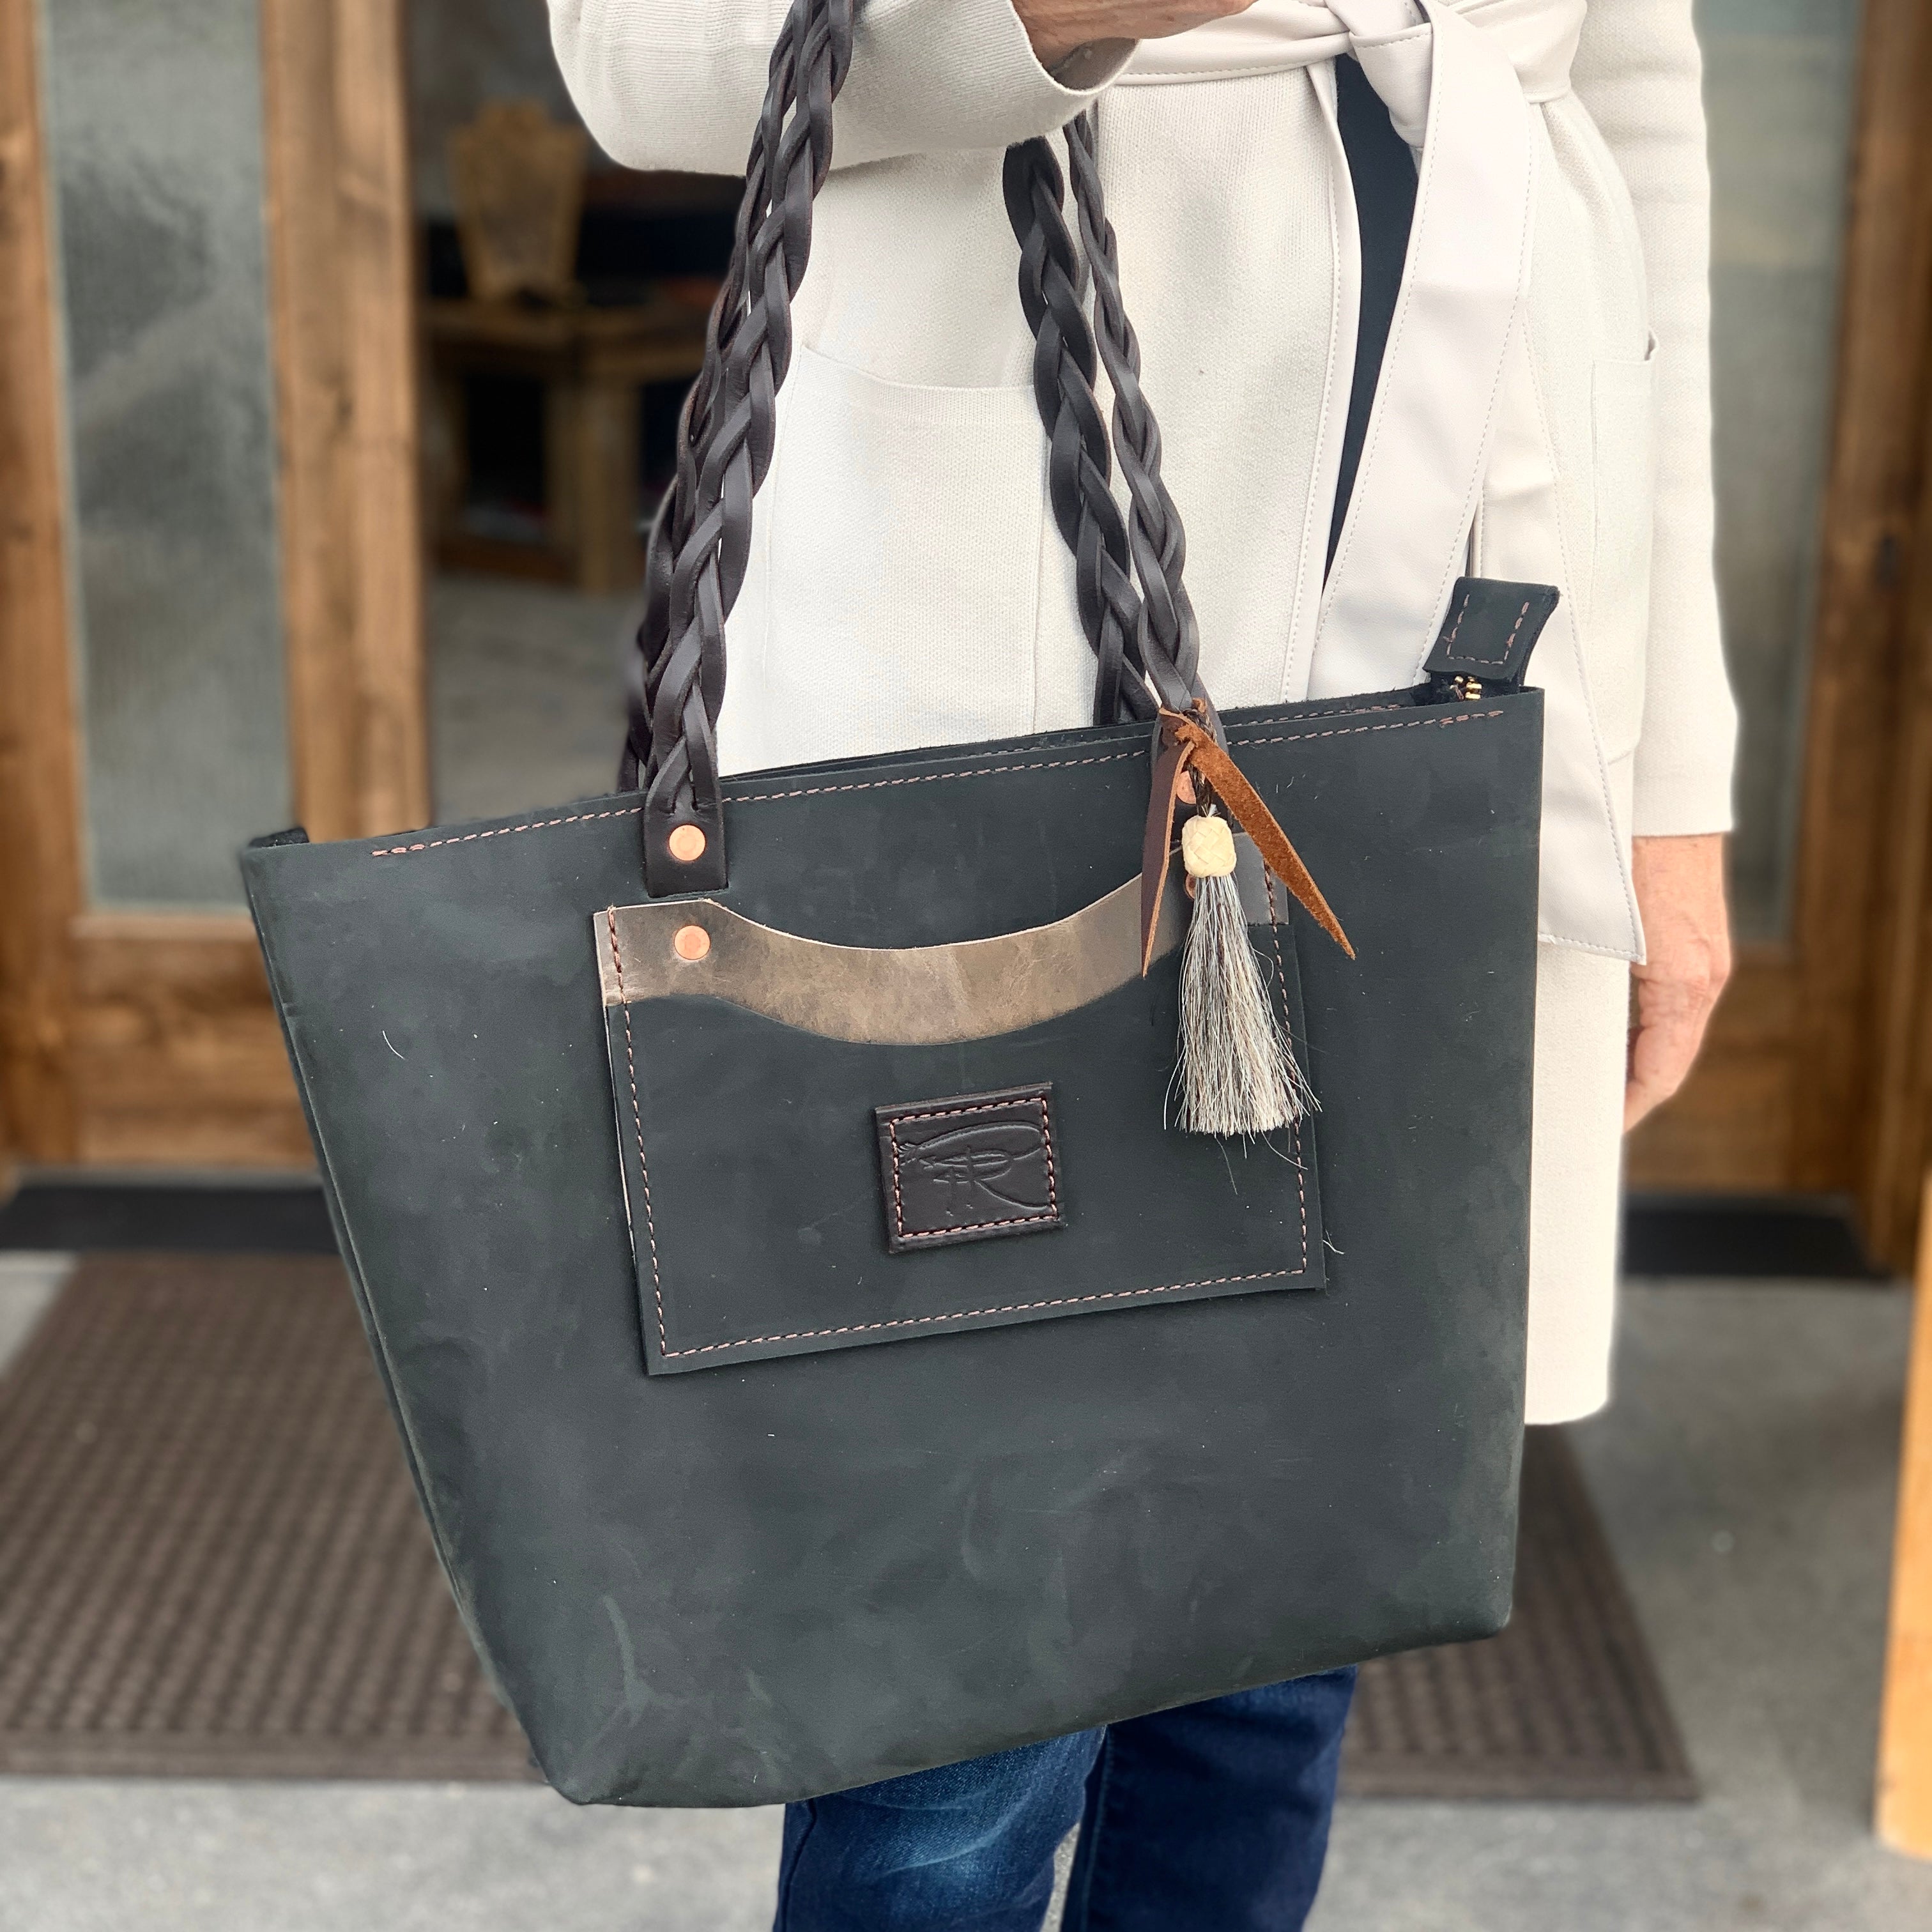 bag handbag black bags travel bags luggage gift shop retail leather maker accessories custom made idaho